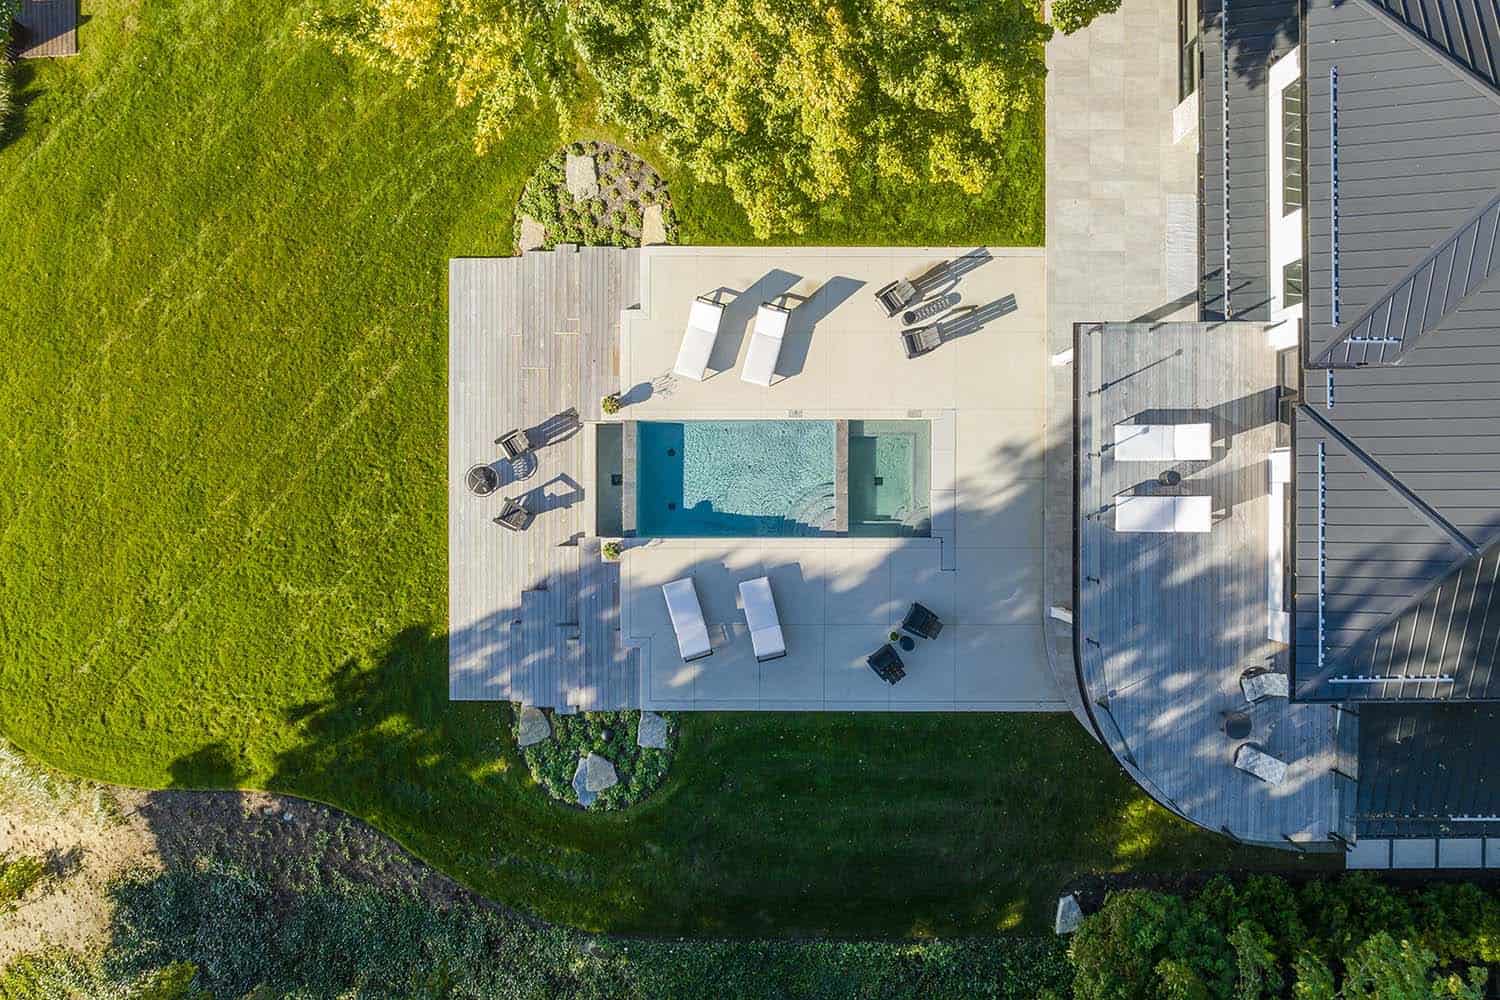 modern-lake-house-exterior-aerial-view